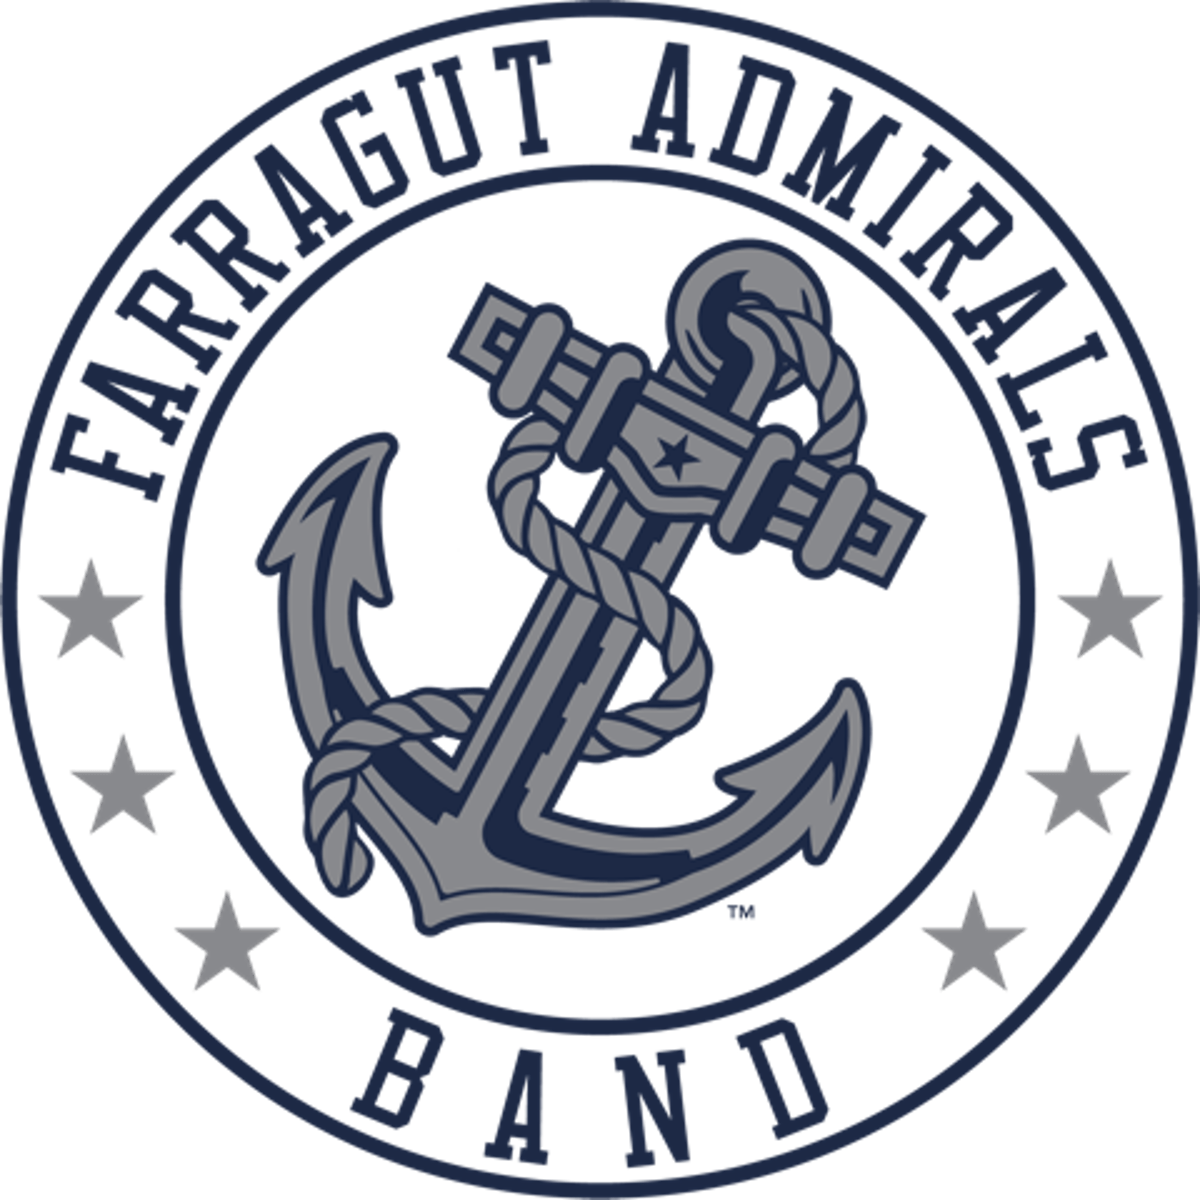 Calendar - Farragut High School Band